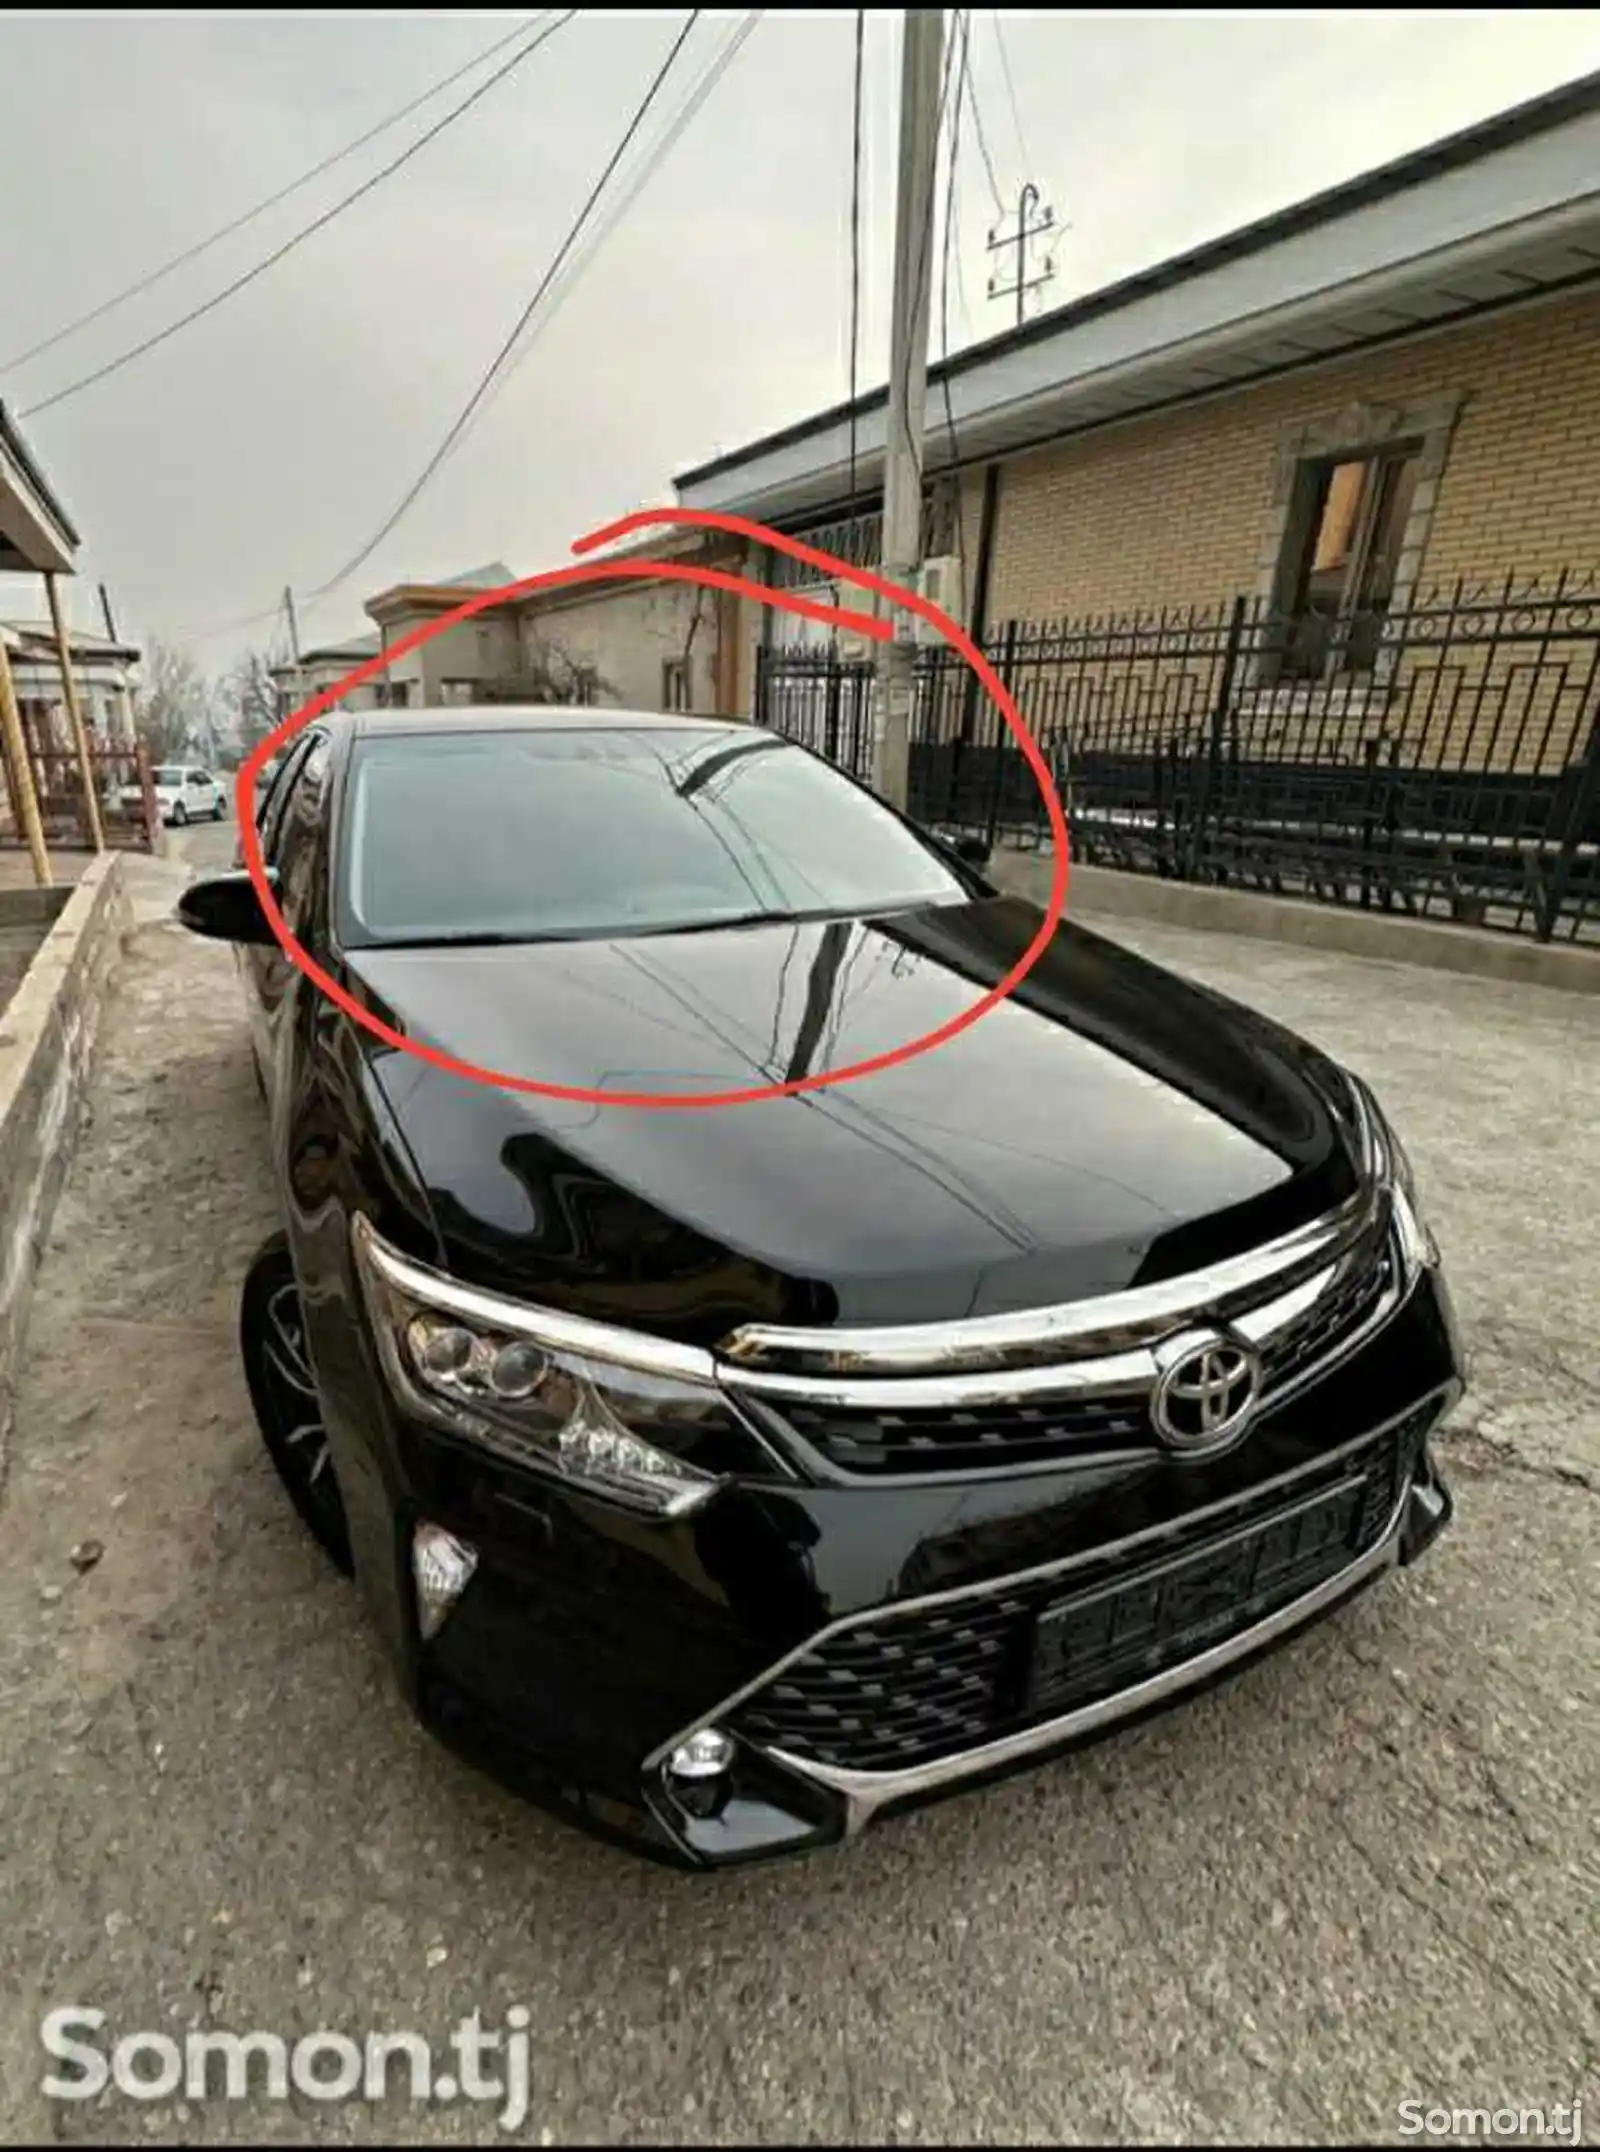 Лобовое стекло на Toyota Camry 5